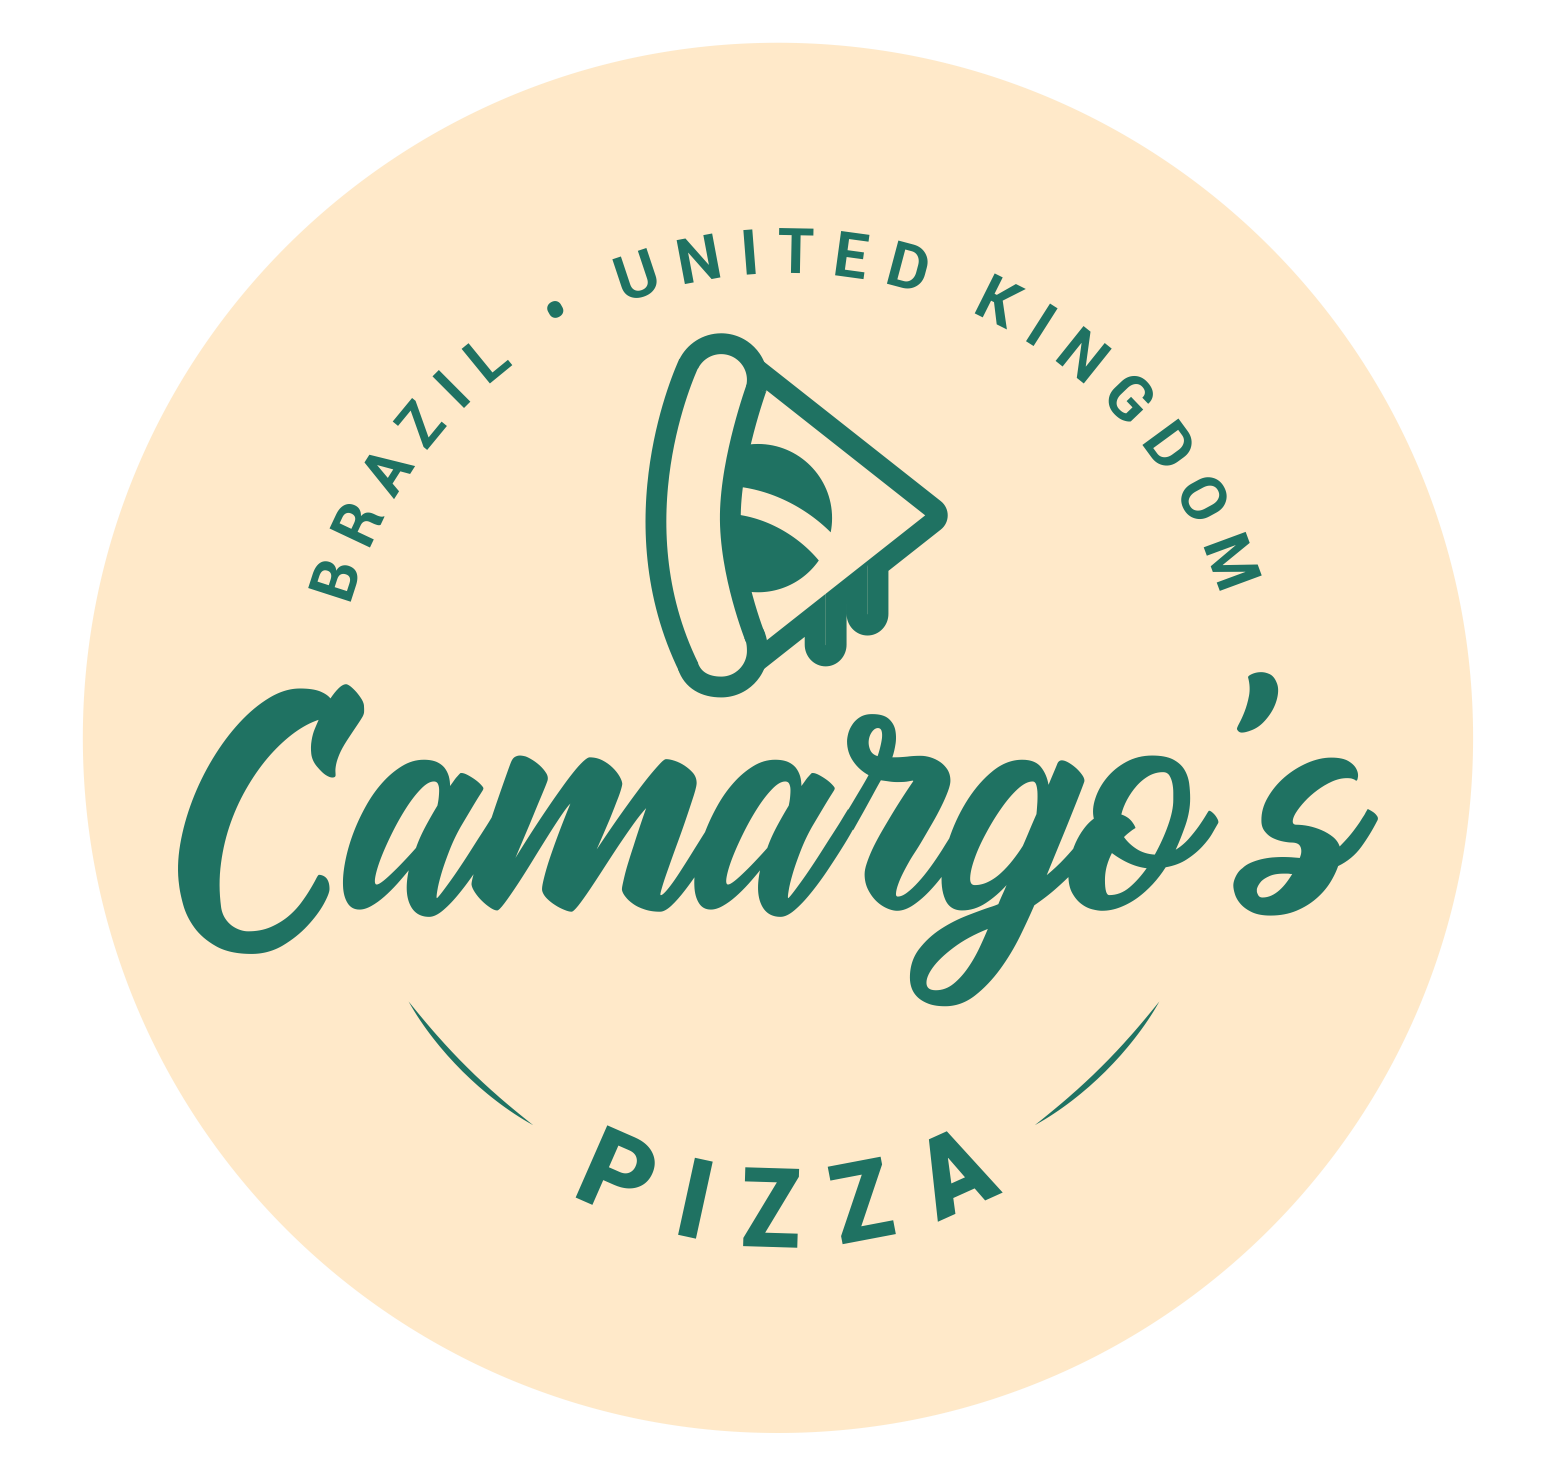 Camargo's Pizza